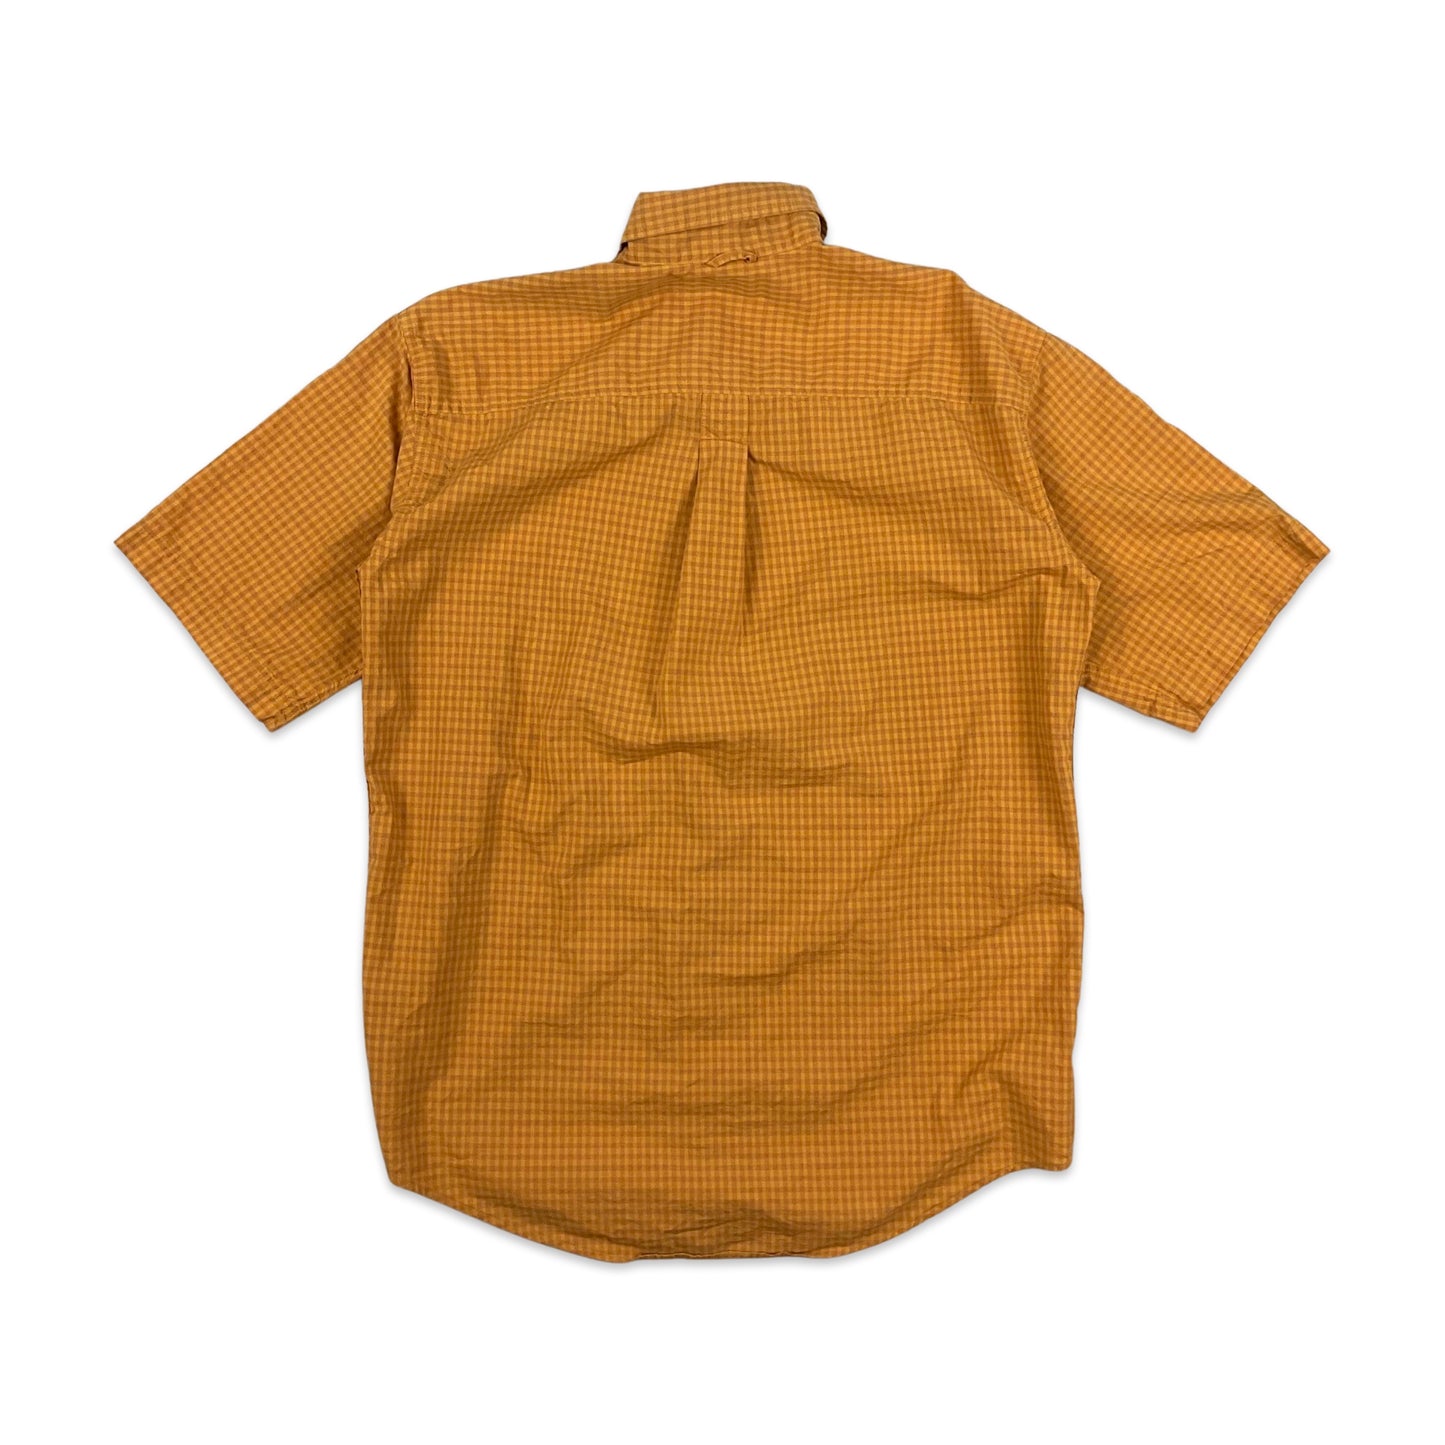 Vintage Timberland Orange Plaid Shirt M L